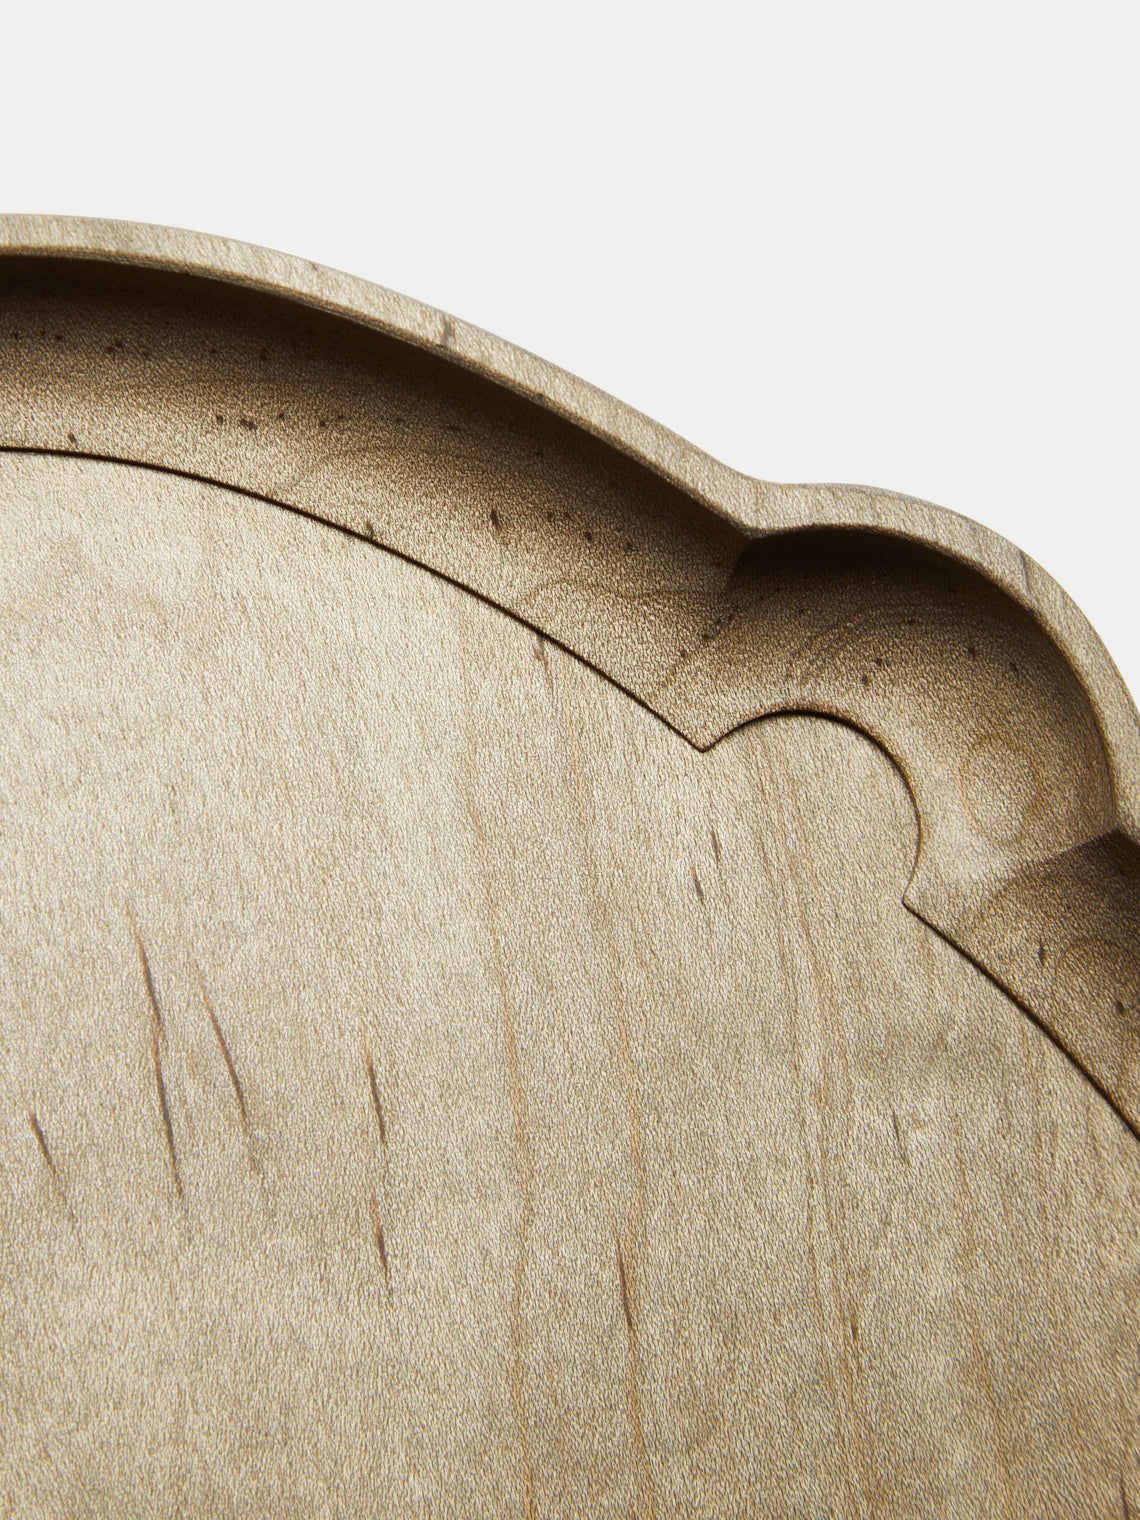 Ifuji - Italian Hand-Carved Wood Large Tray - Brown - ABASK